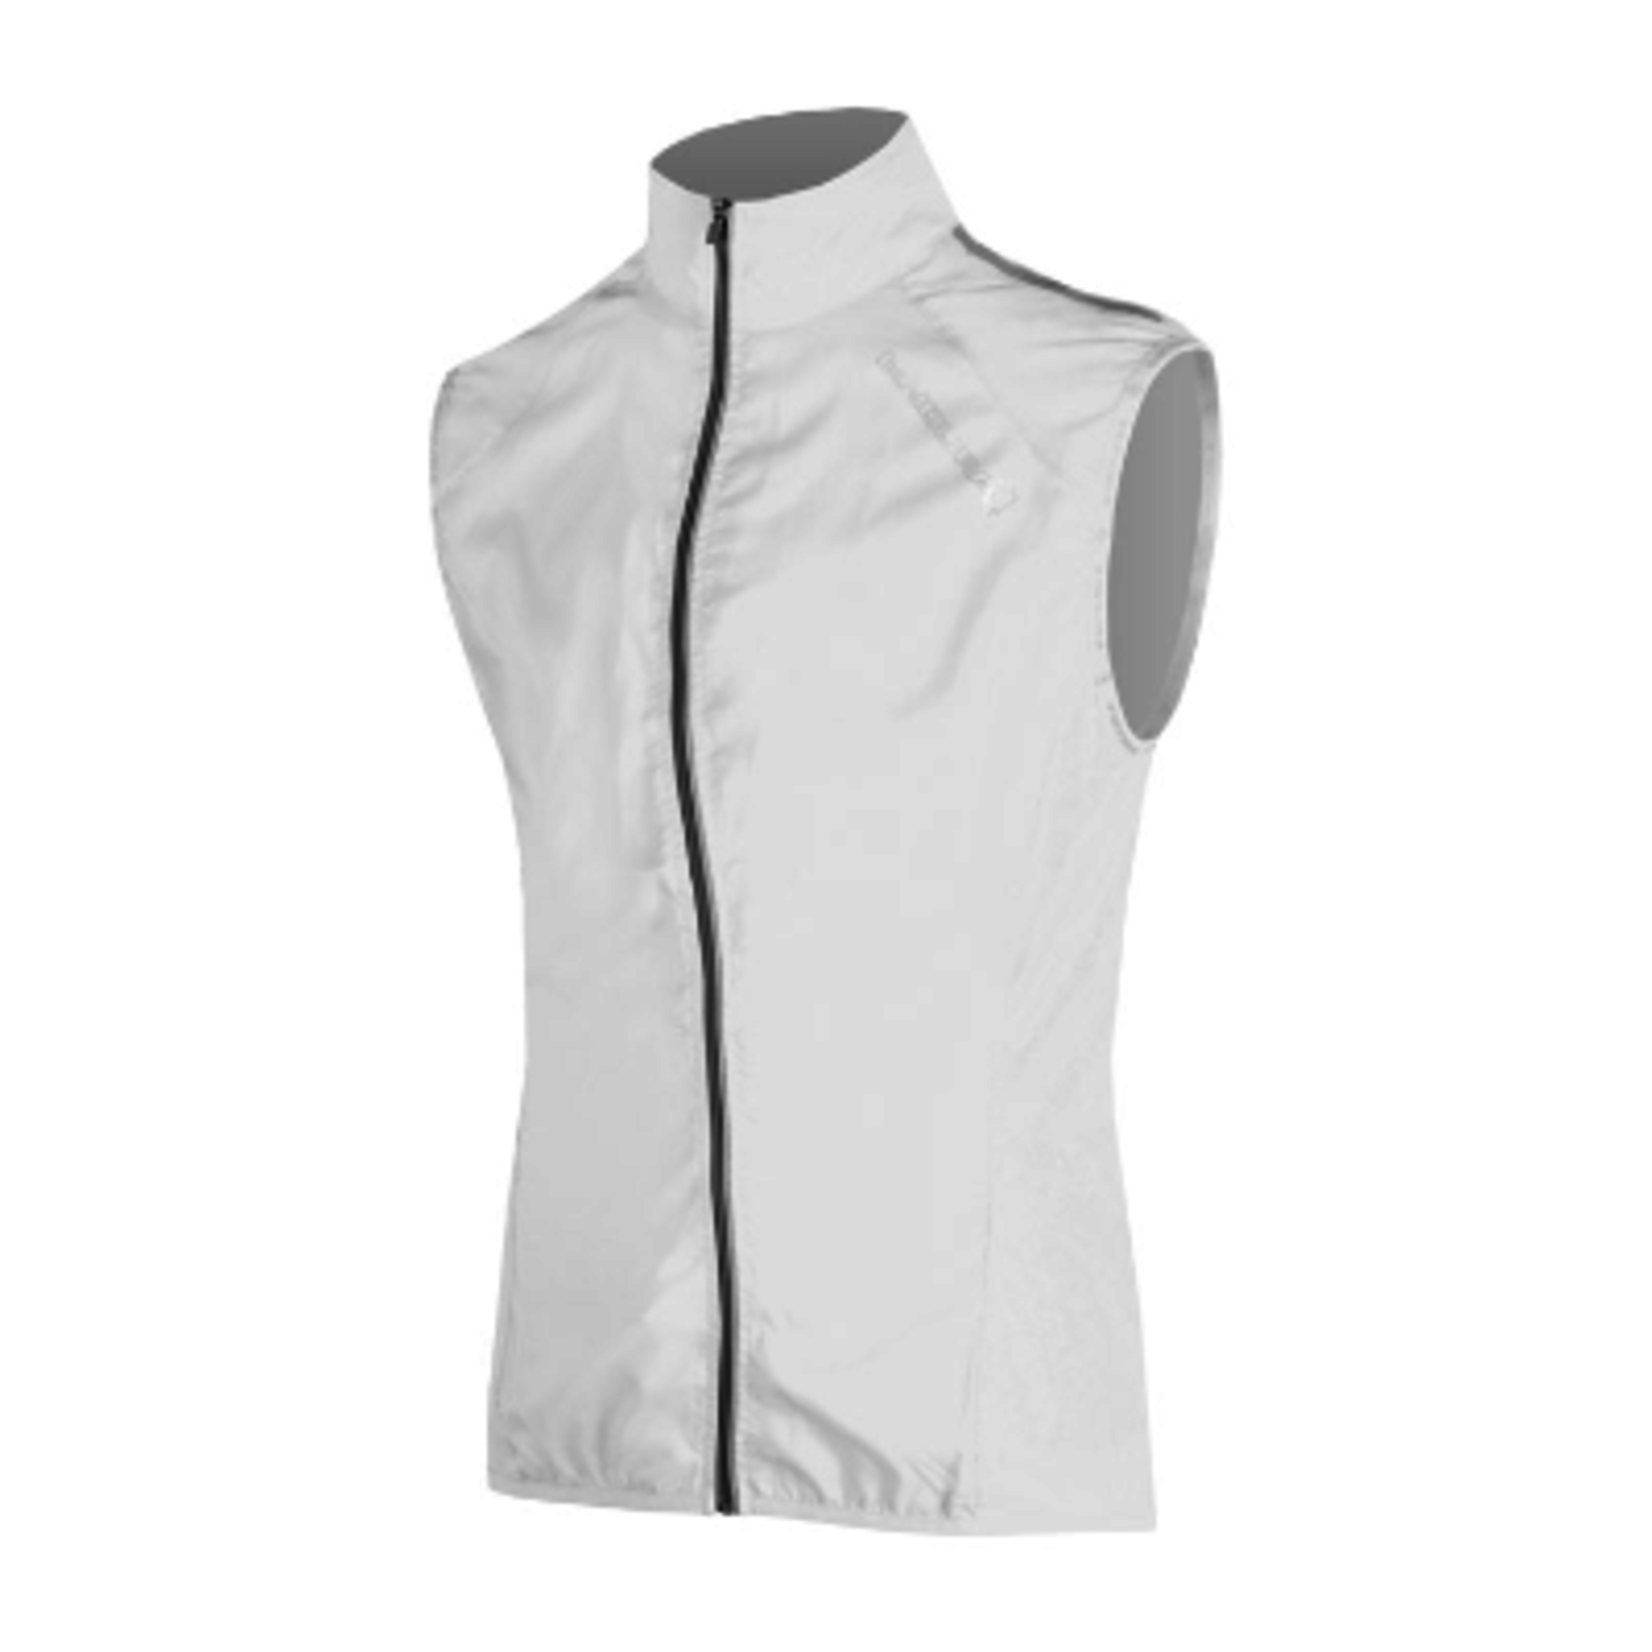 Endura Endura Women's Pakagilet II Vest - White Windproof Ripstop Fabric